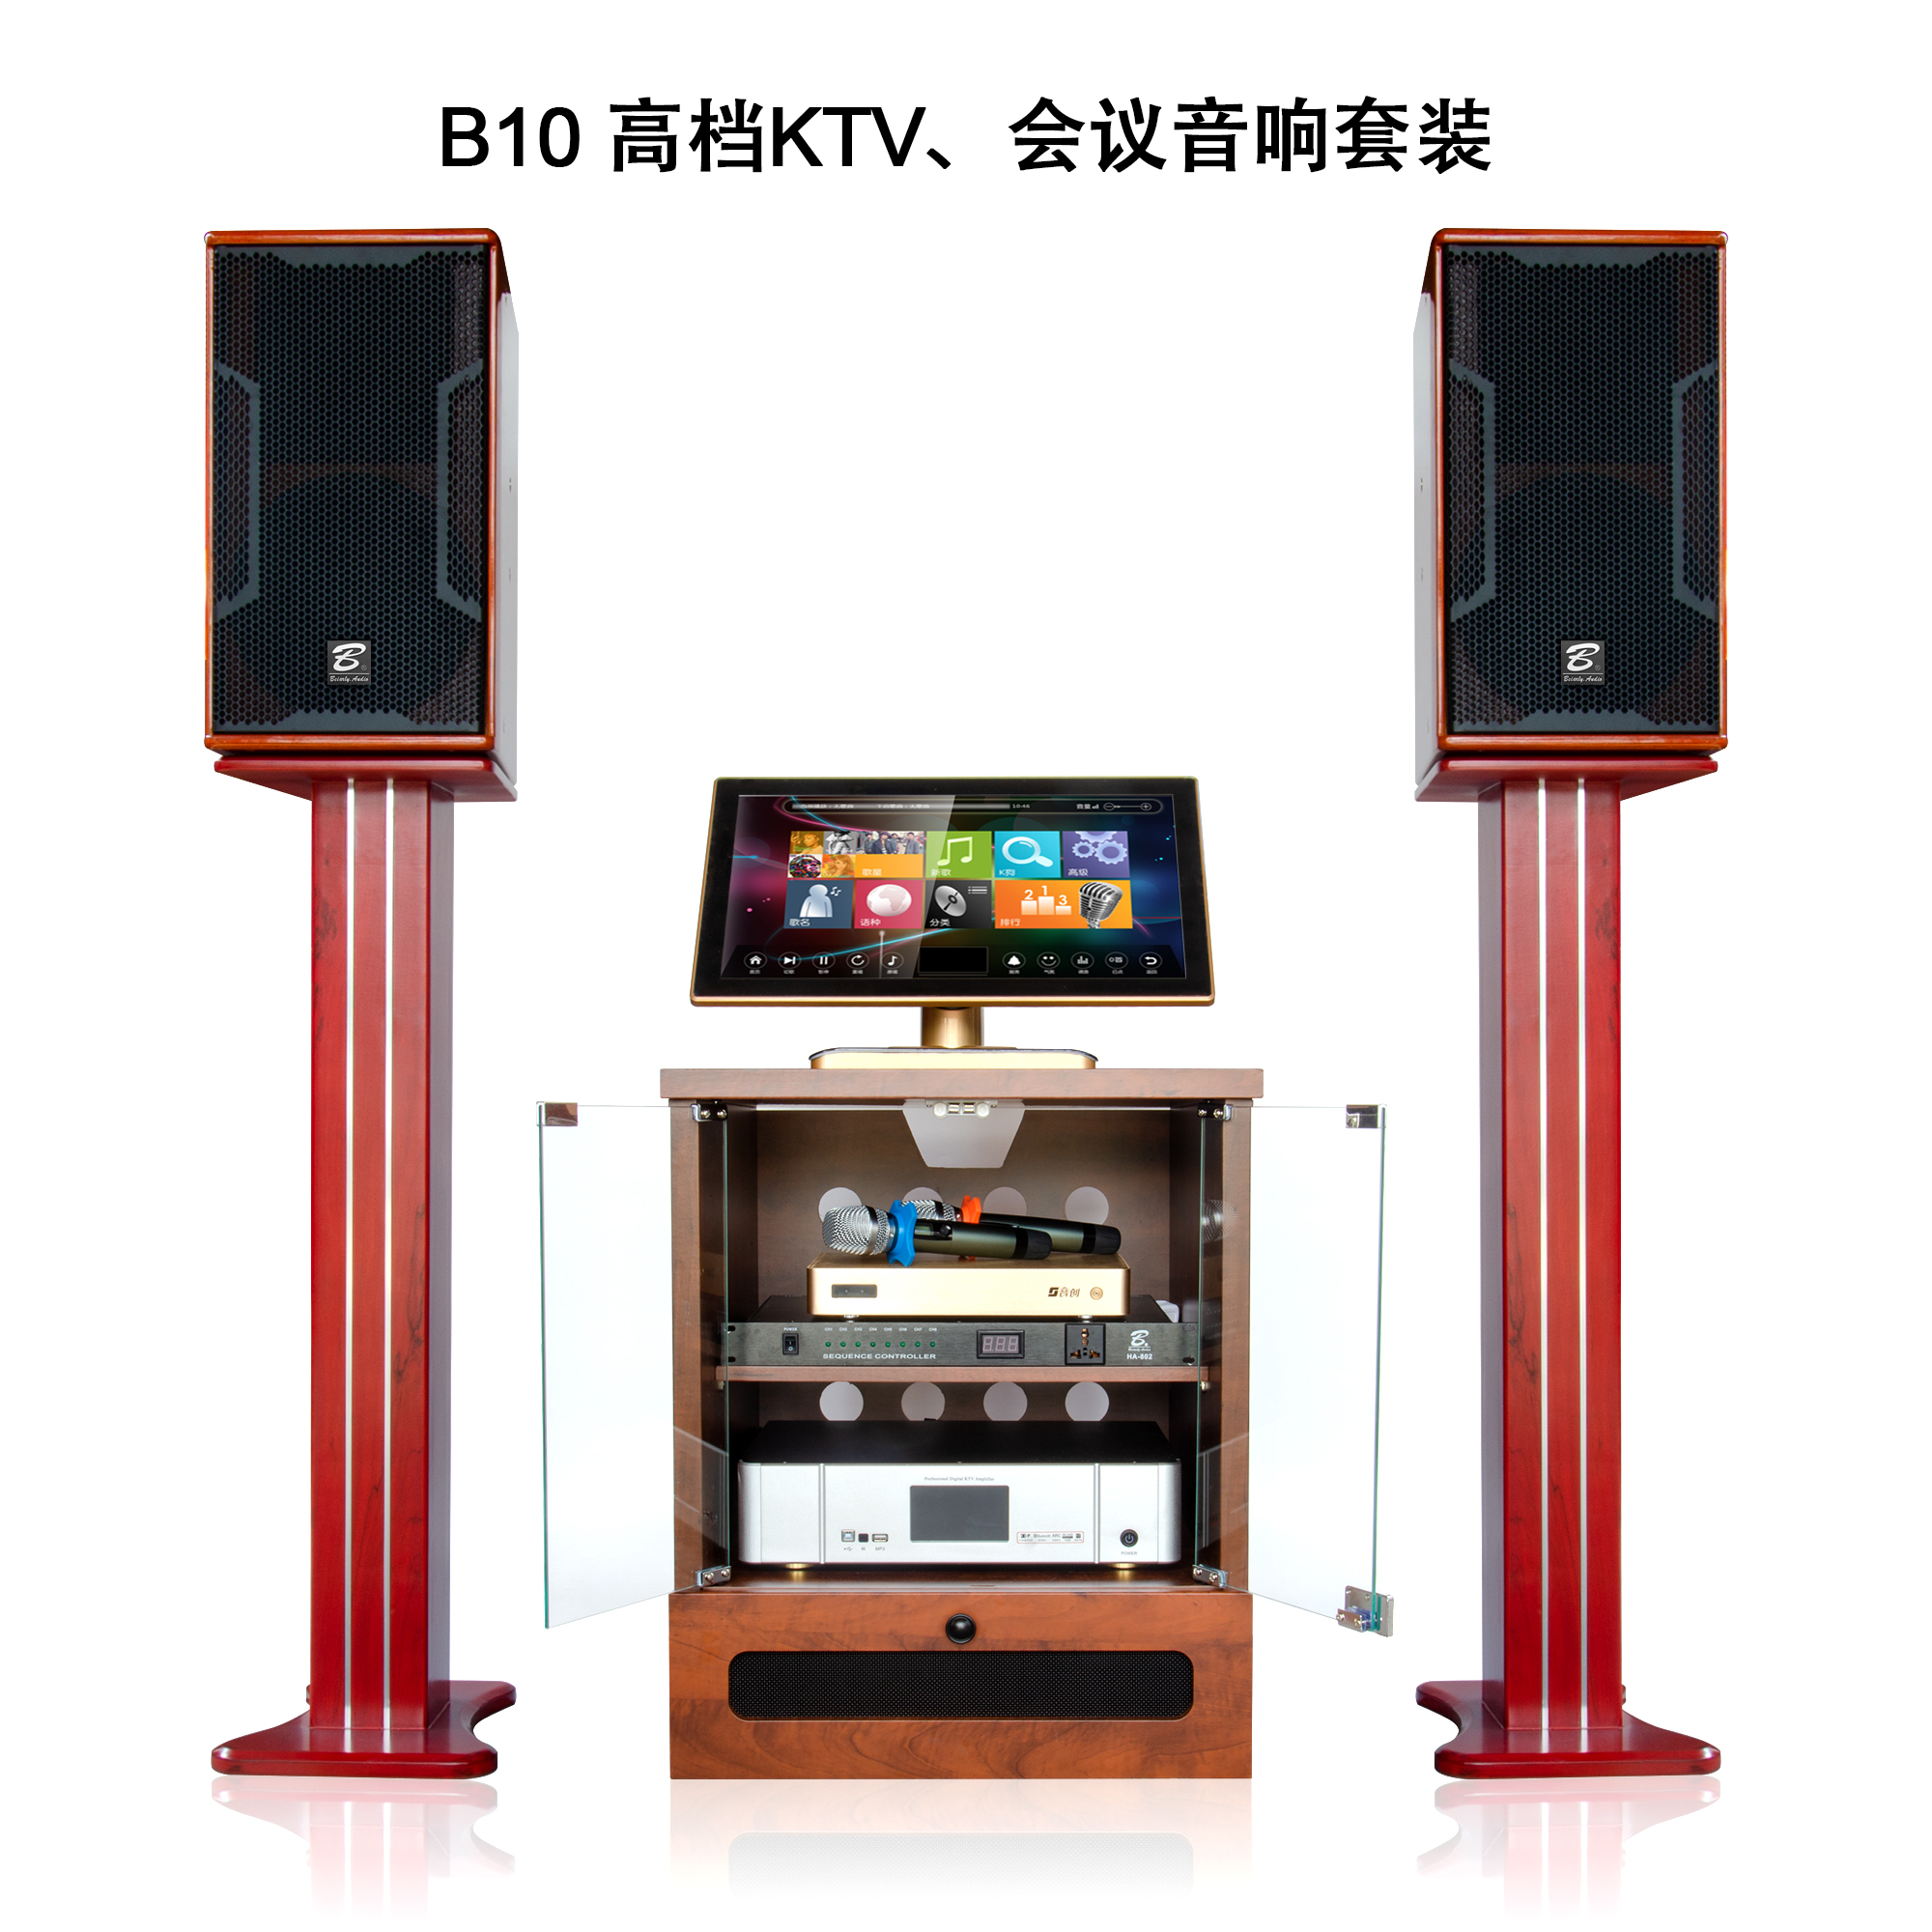 B10 KTV professional audio set